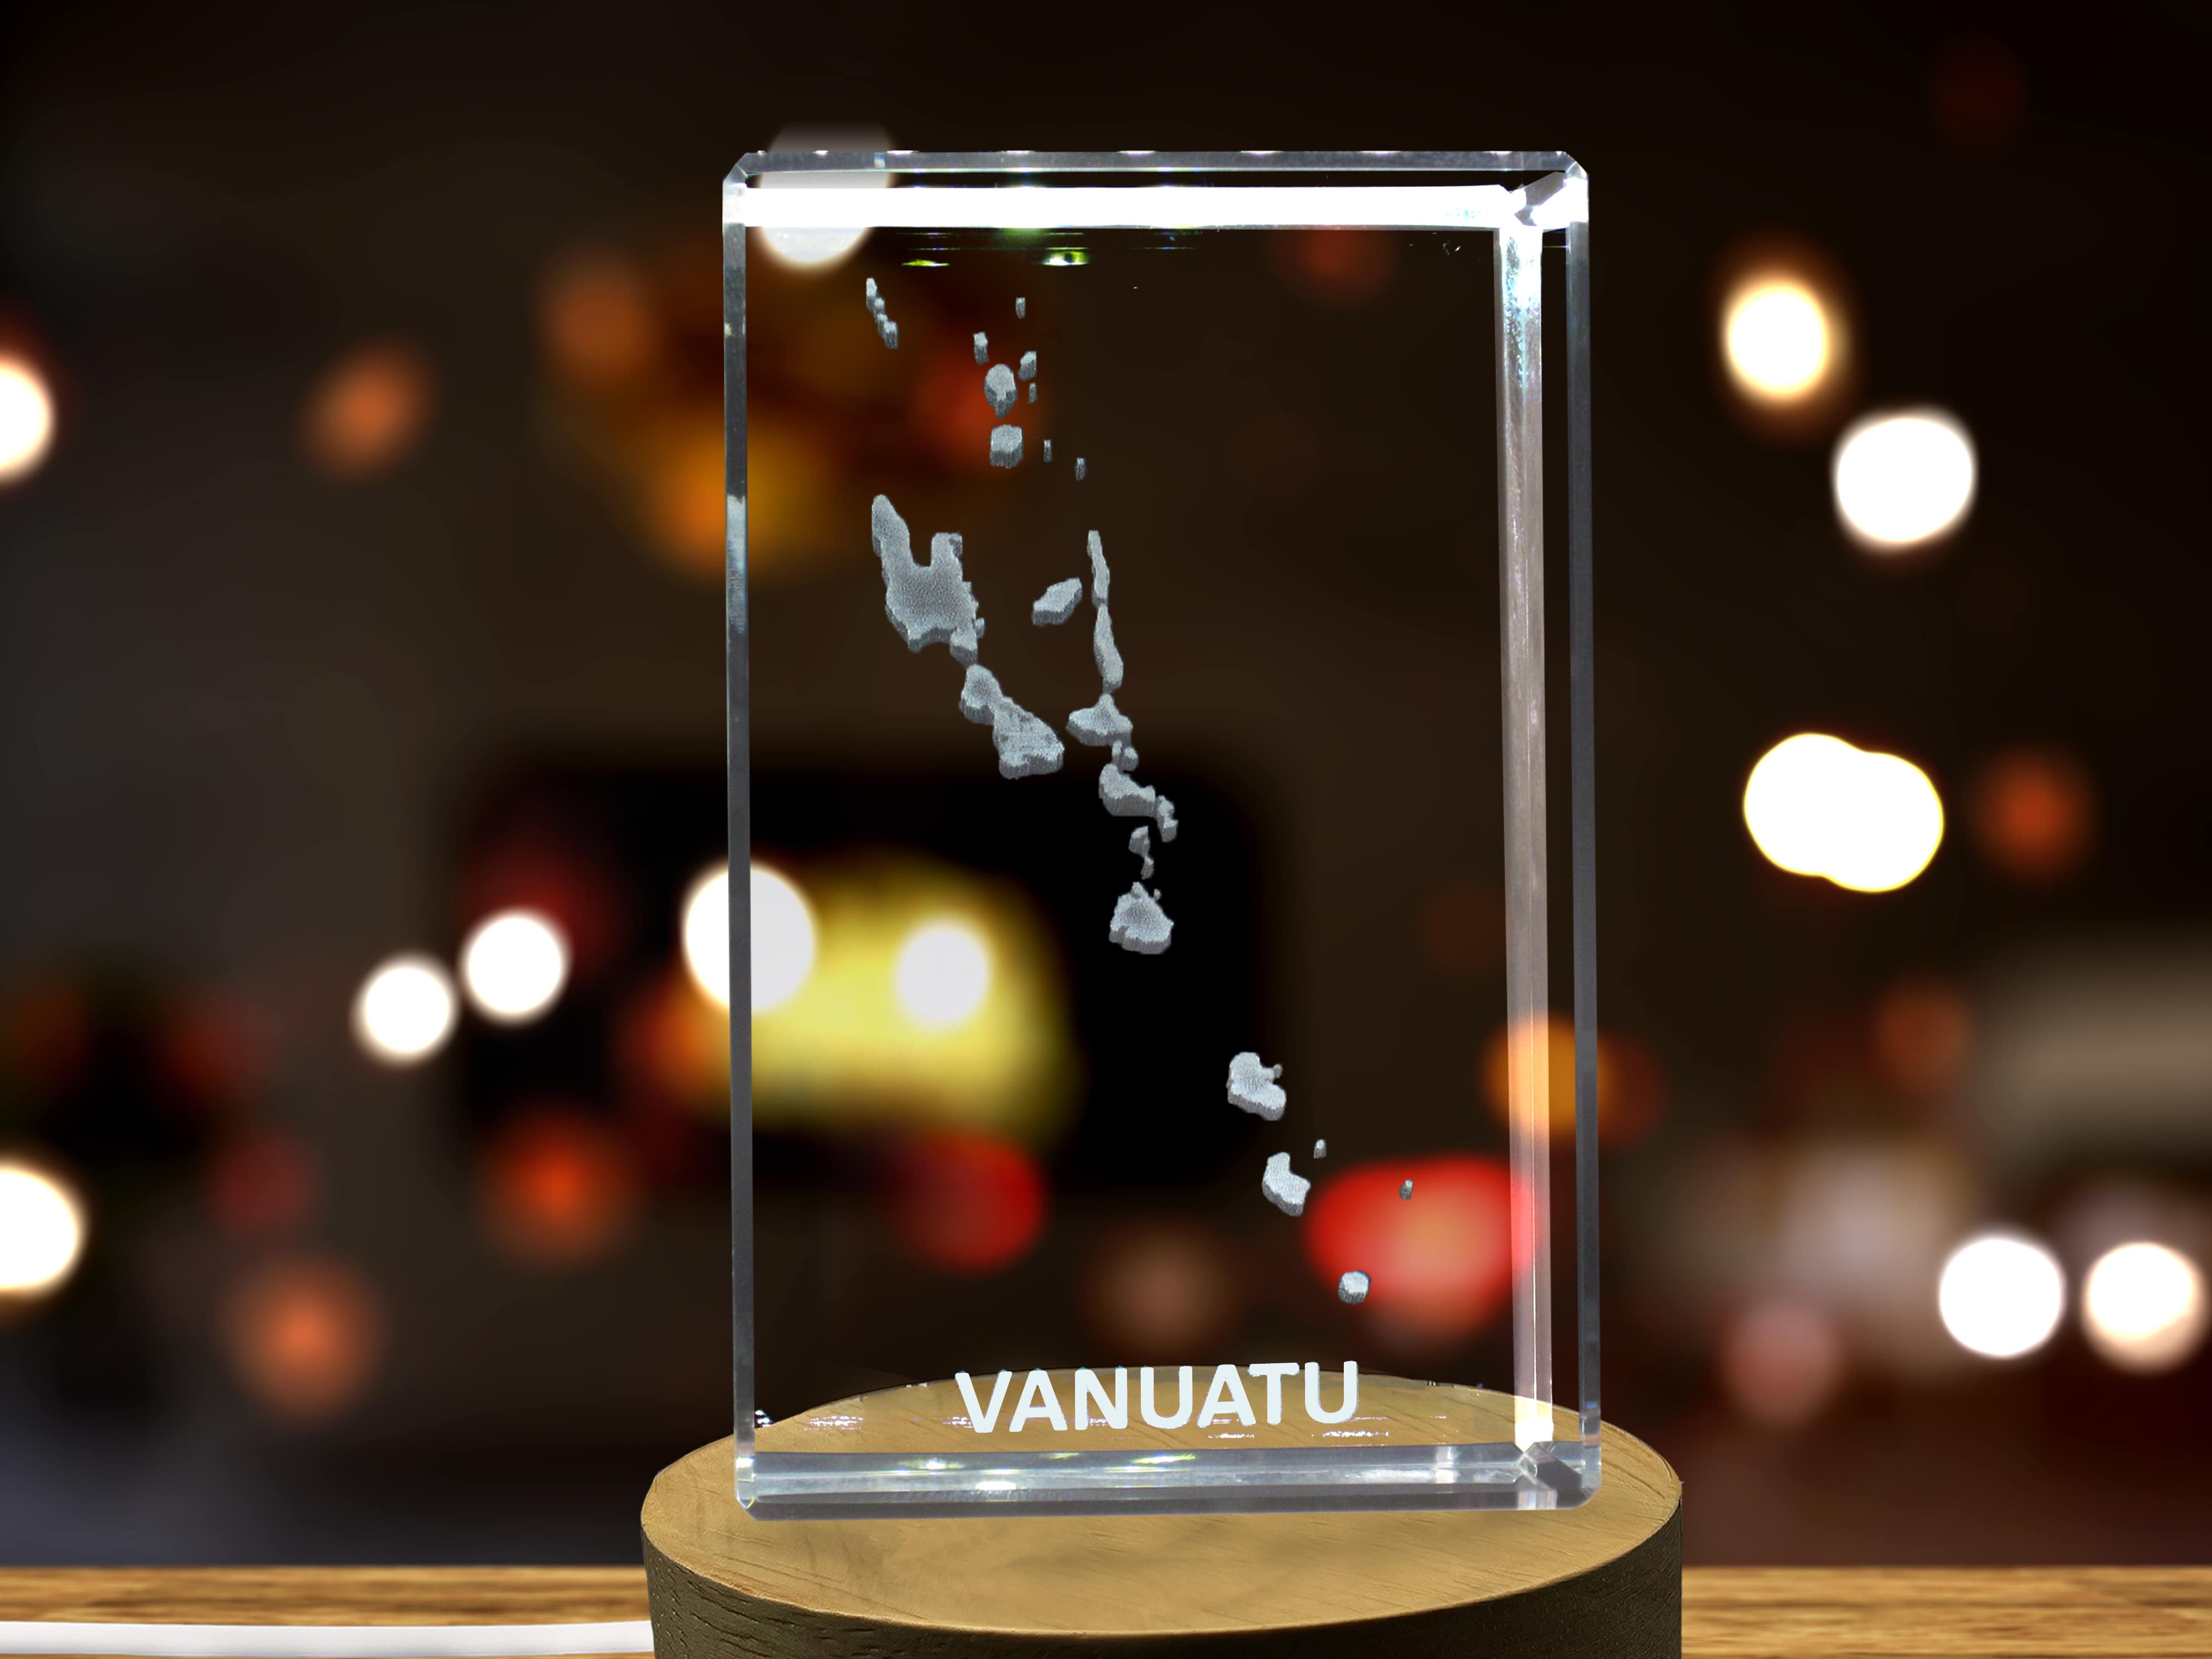 Vanuatu 3D Engraved Crystal 3D Engraved Crystal Keepsake/Gift/Decor/Collectible/Souvenir A&B Crystal Collection